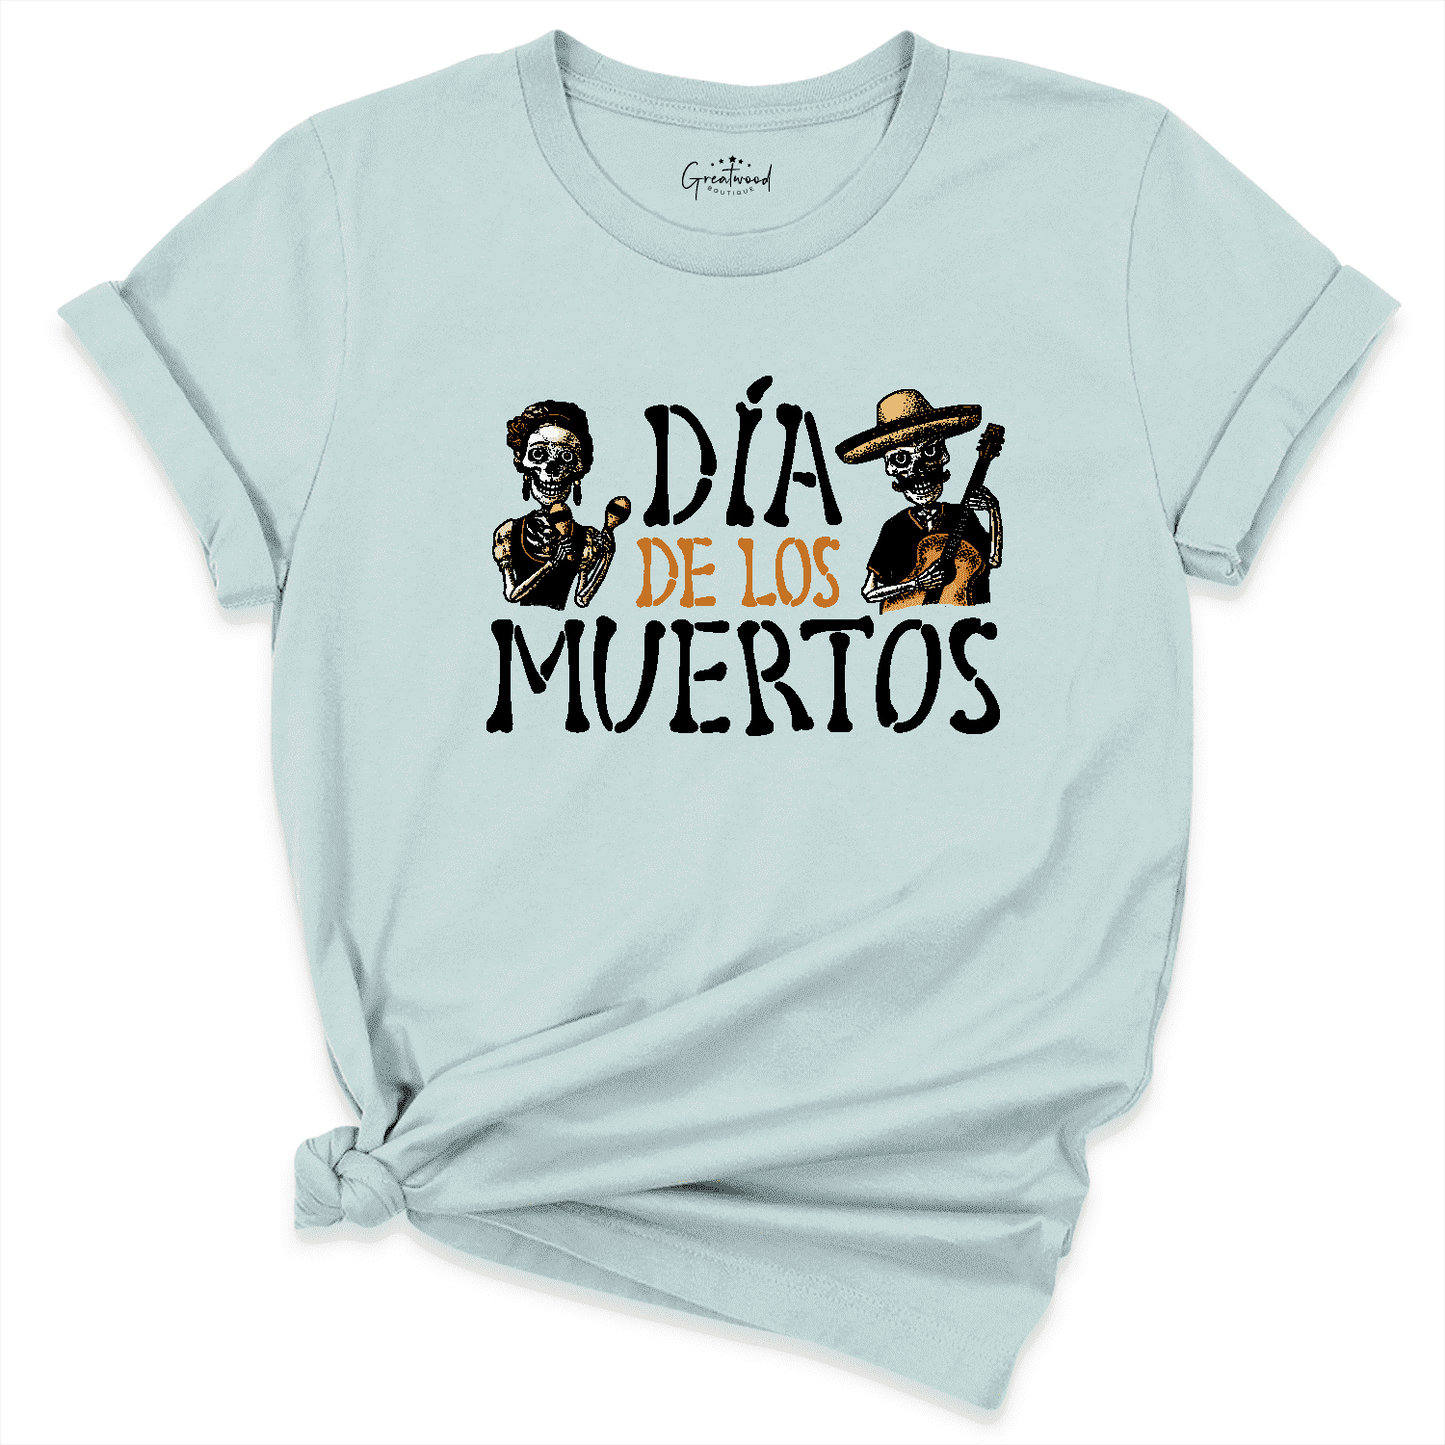 Dia De Los Muertos Shirt